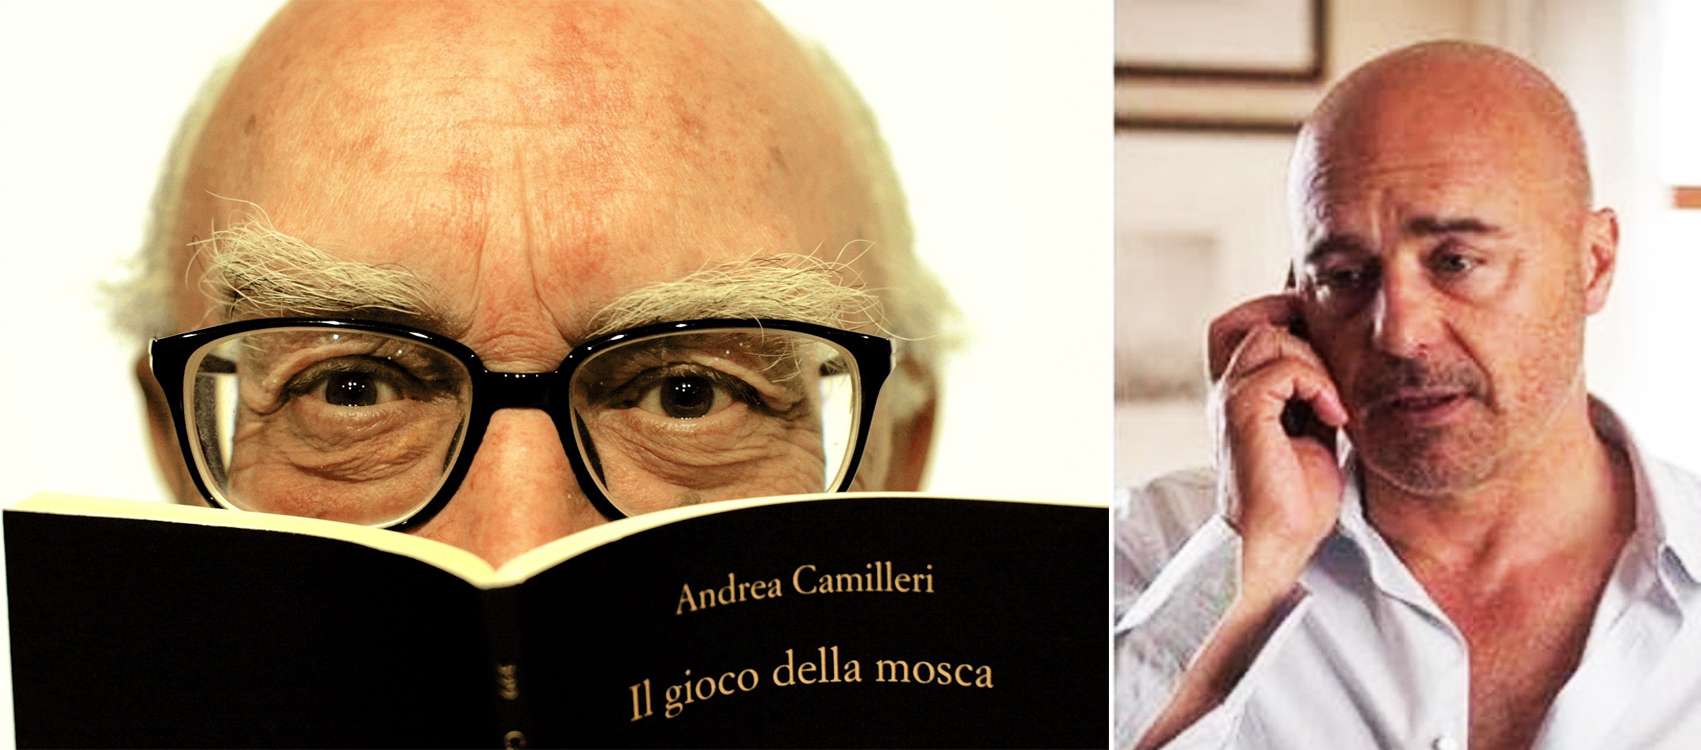 Andrea Camilleri, η προσωποποίηση της αναζήτησης και της αμφιβολίας